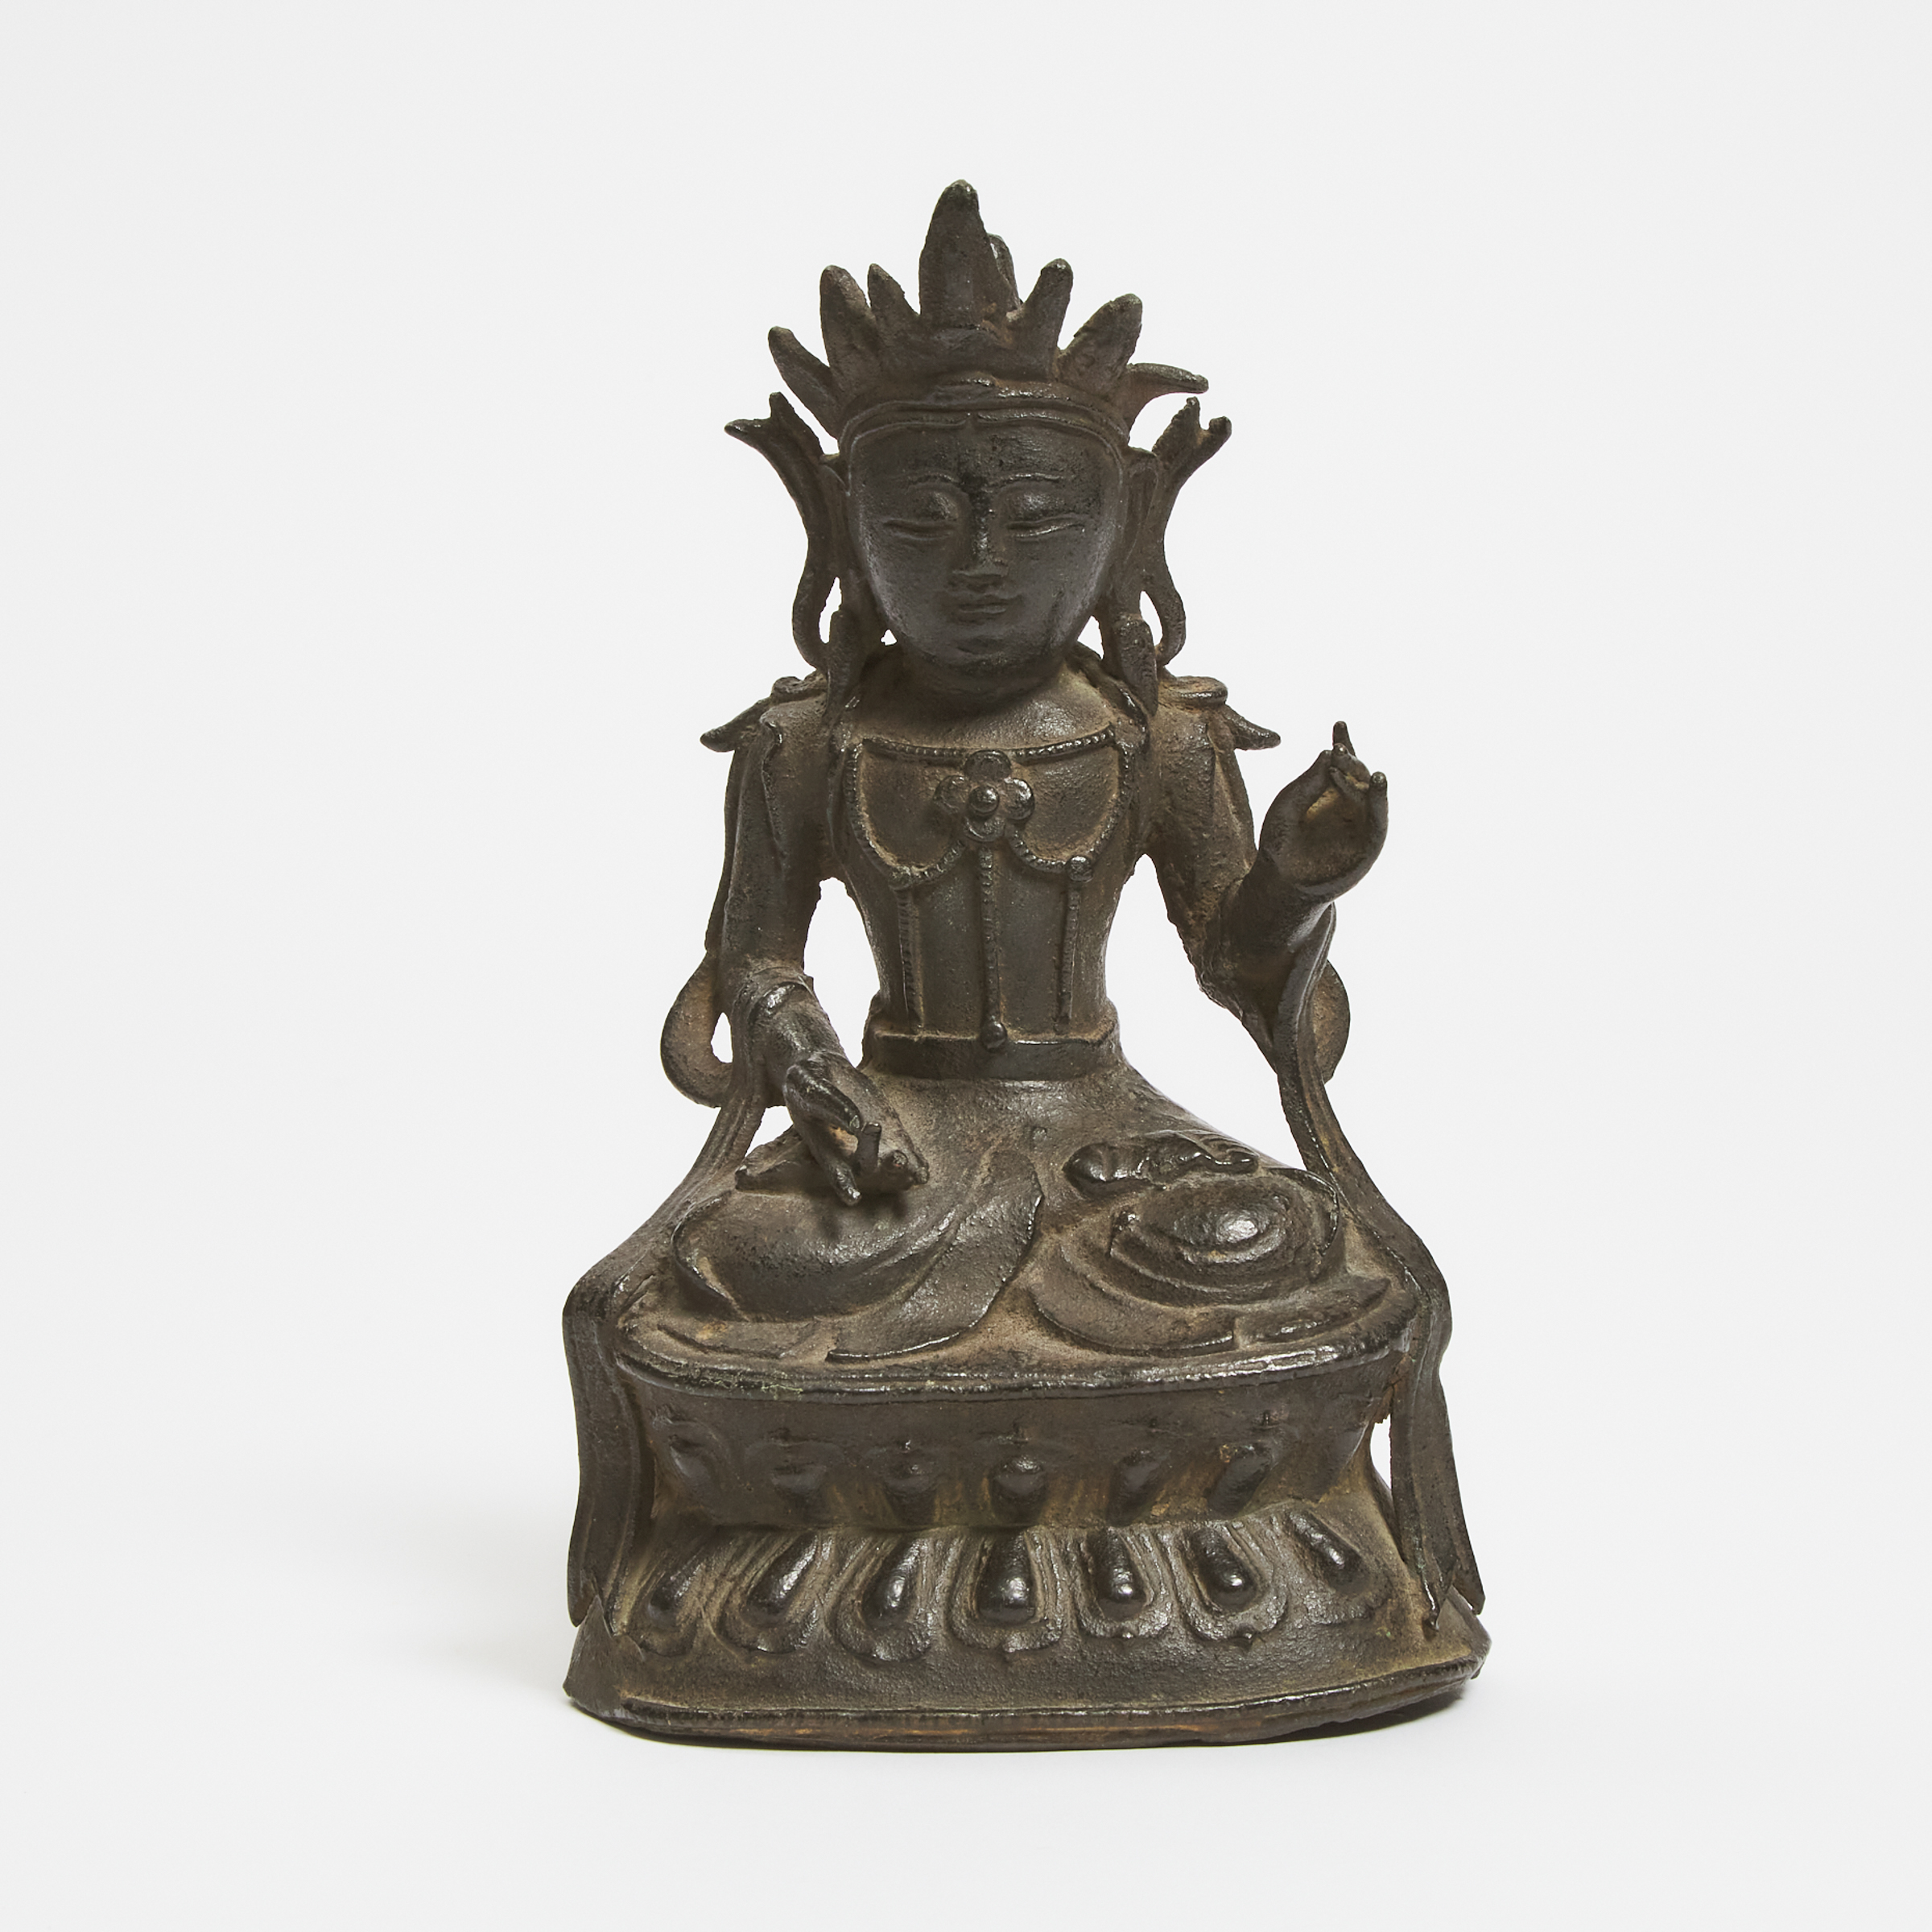 A Bronze Figure of Buddha, Ming Dynasty (1368-1644)